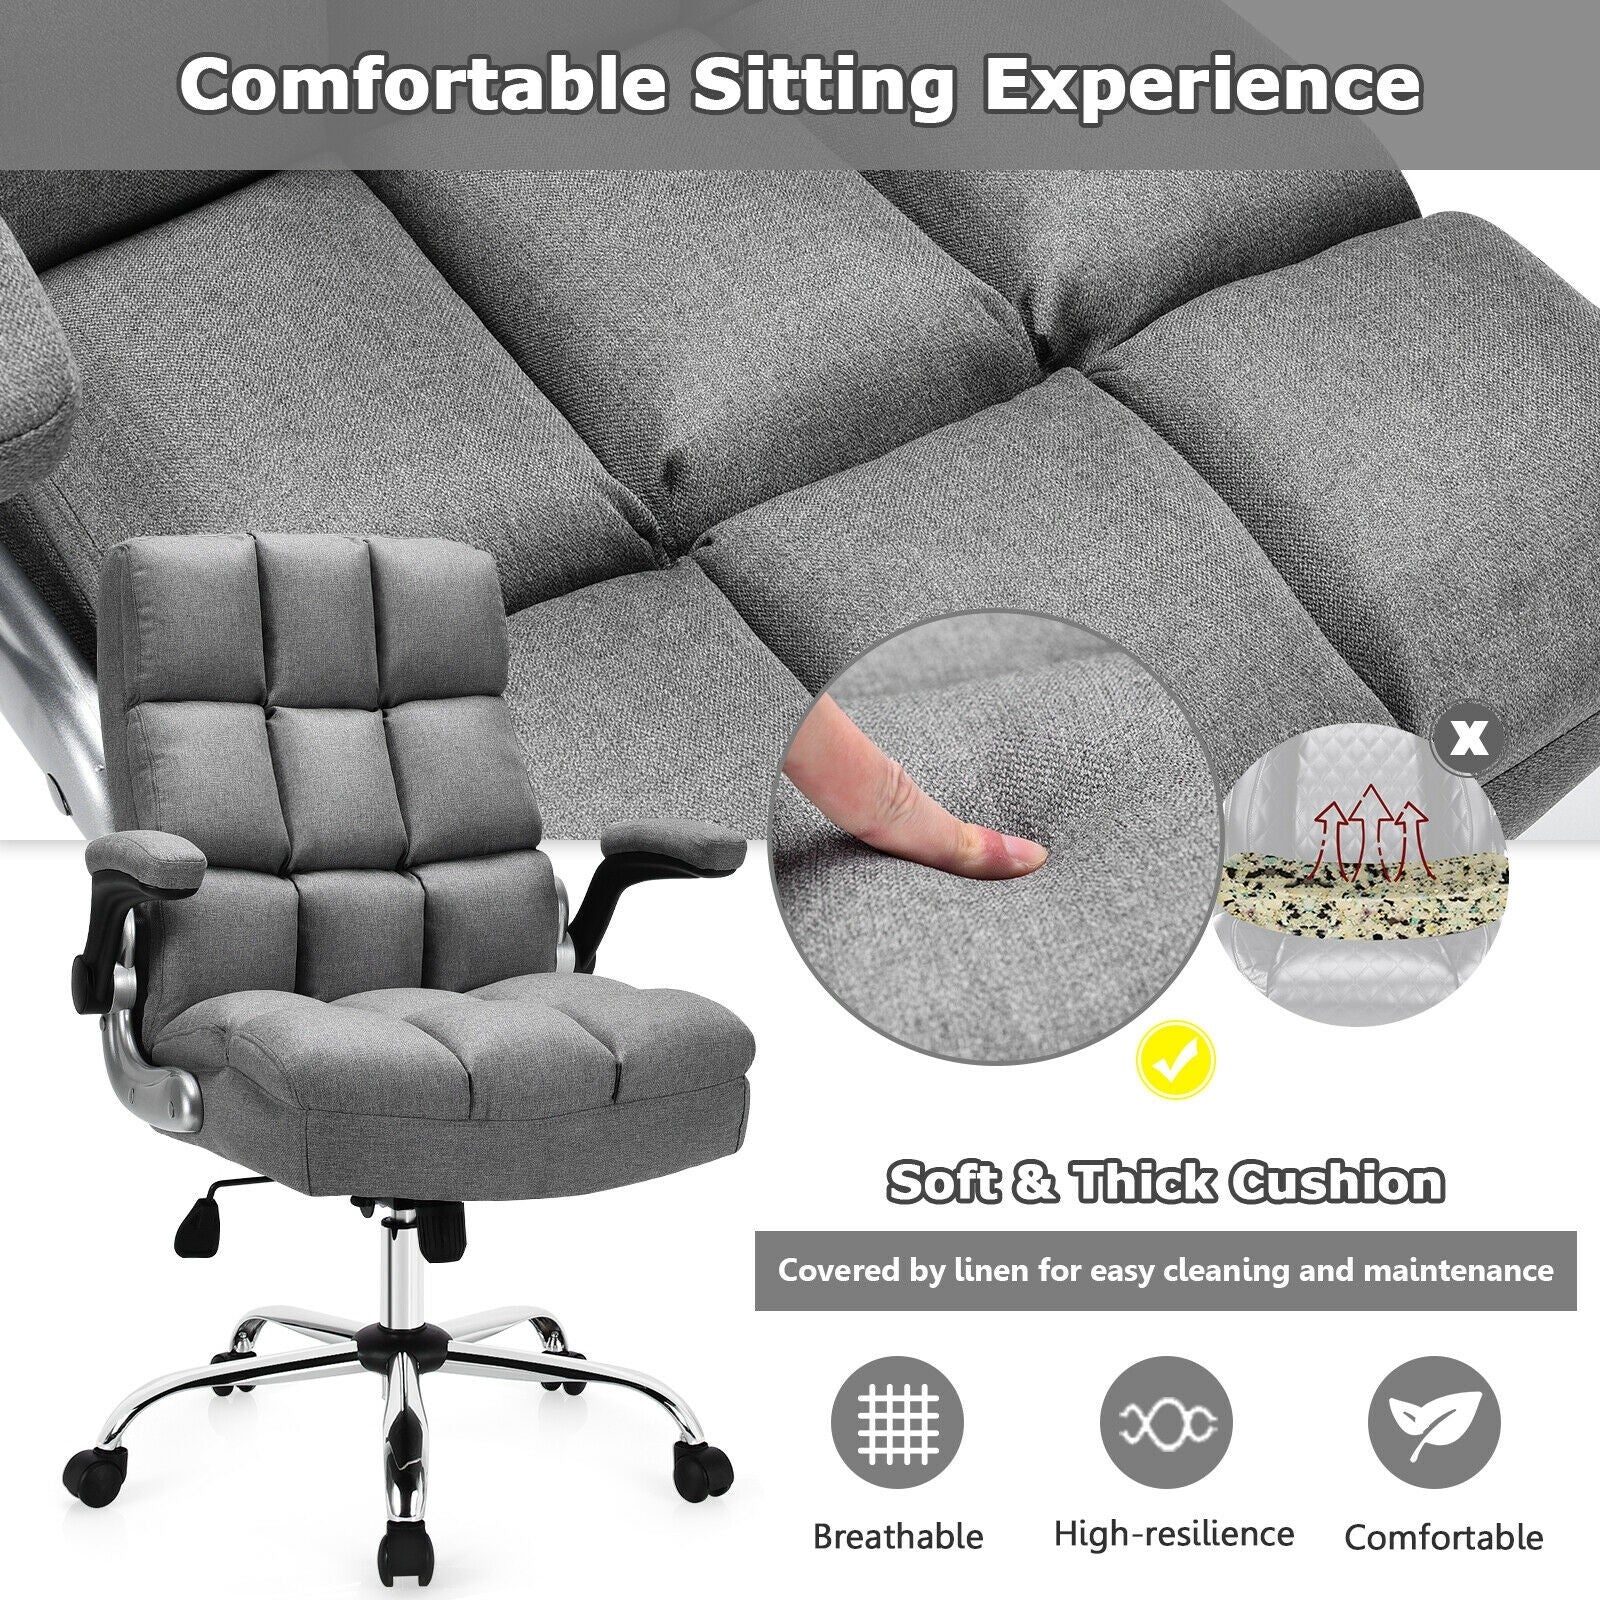 Giantex Executive Office Chair,Adjustable Tilt Angle and Flip-up